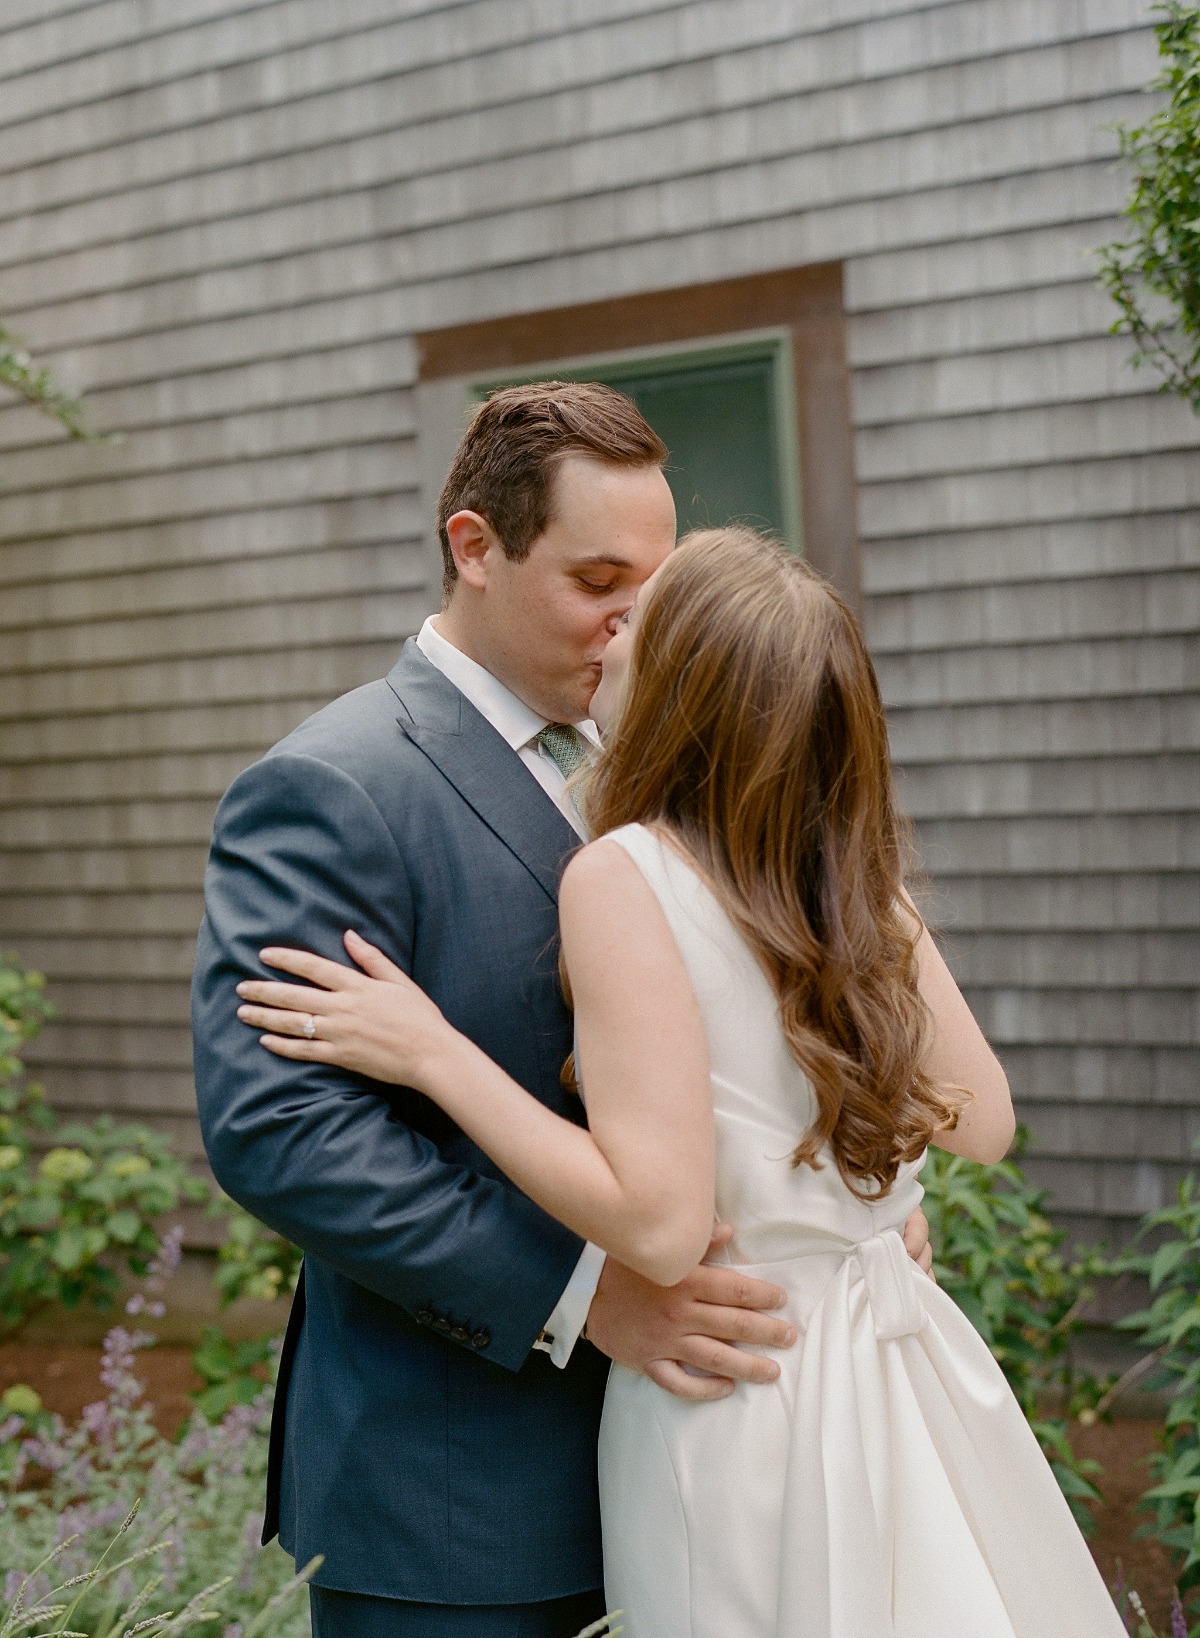 classic New England style wedding dress